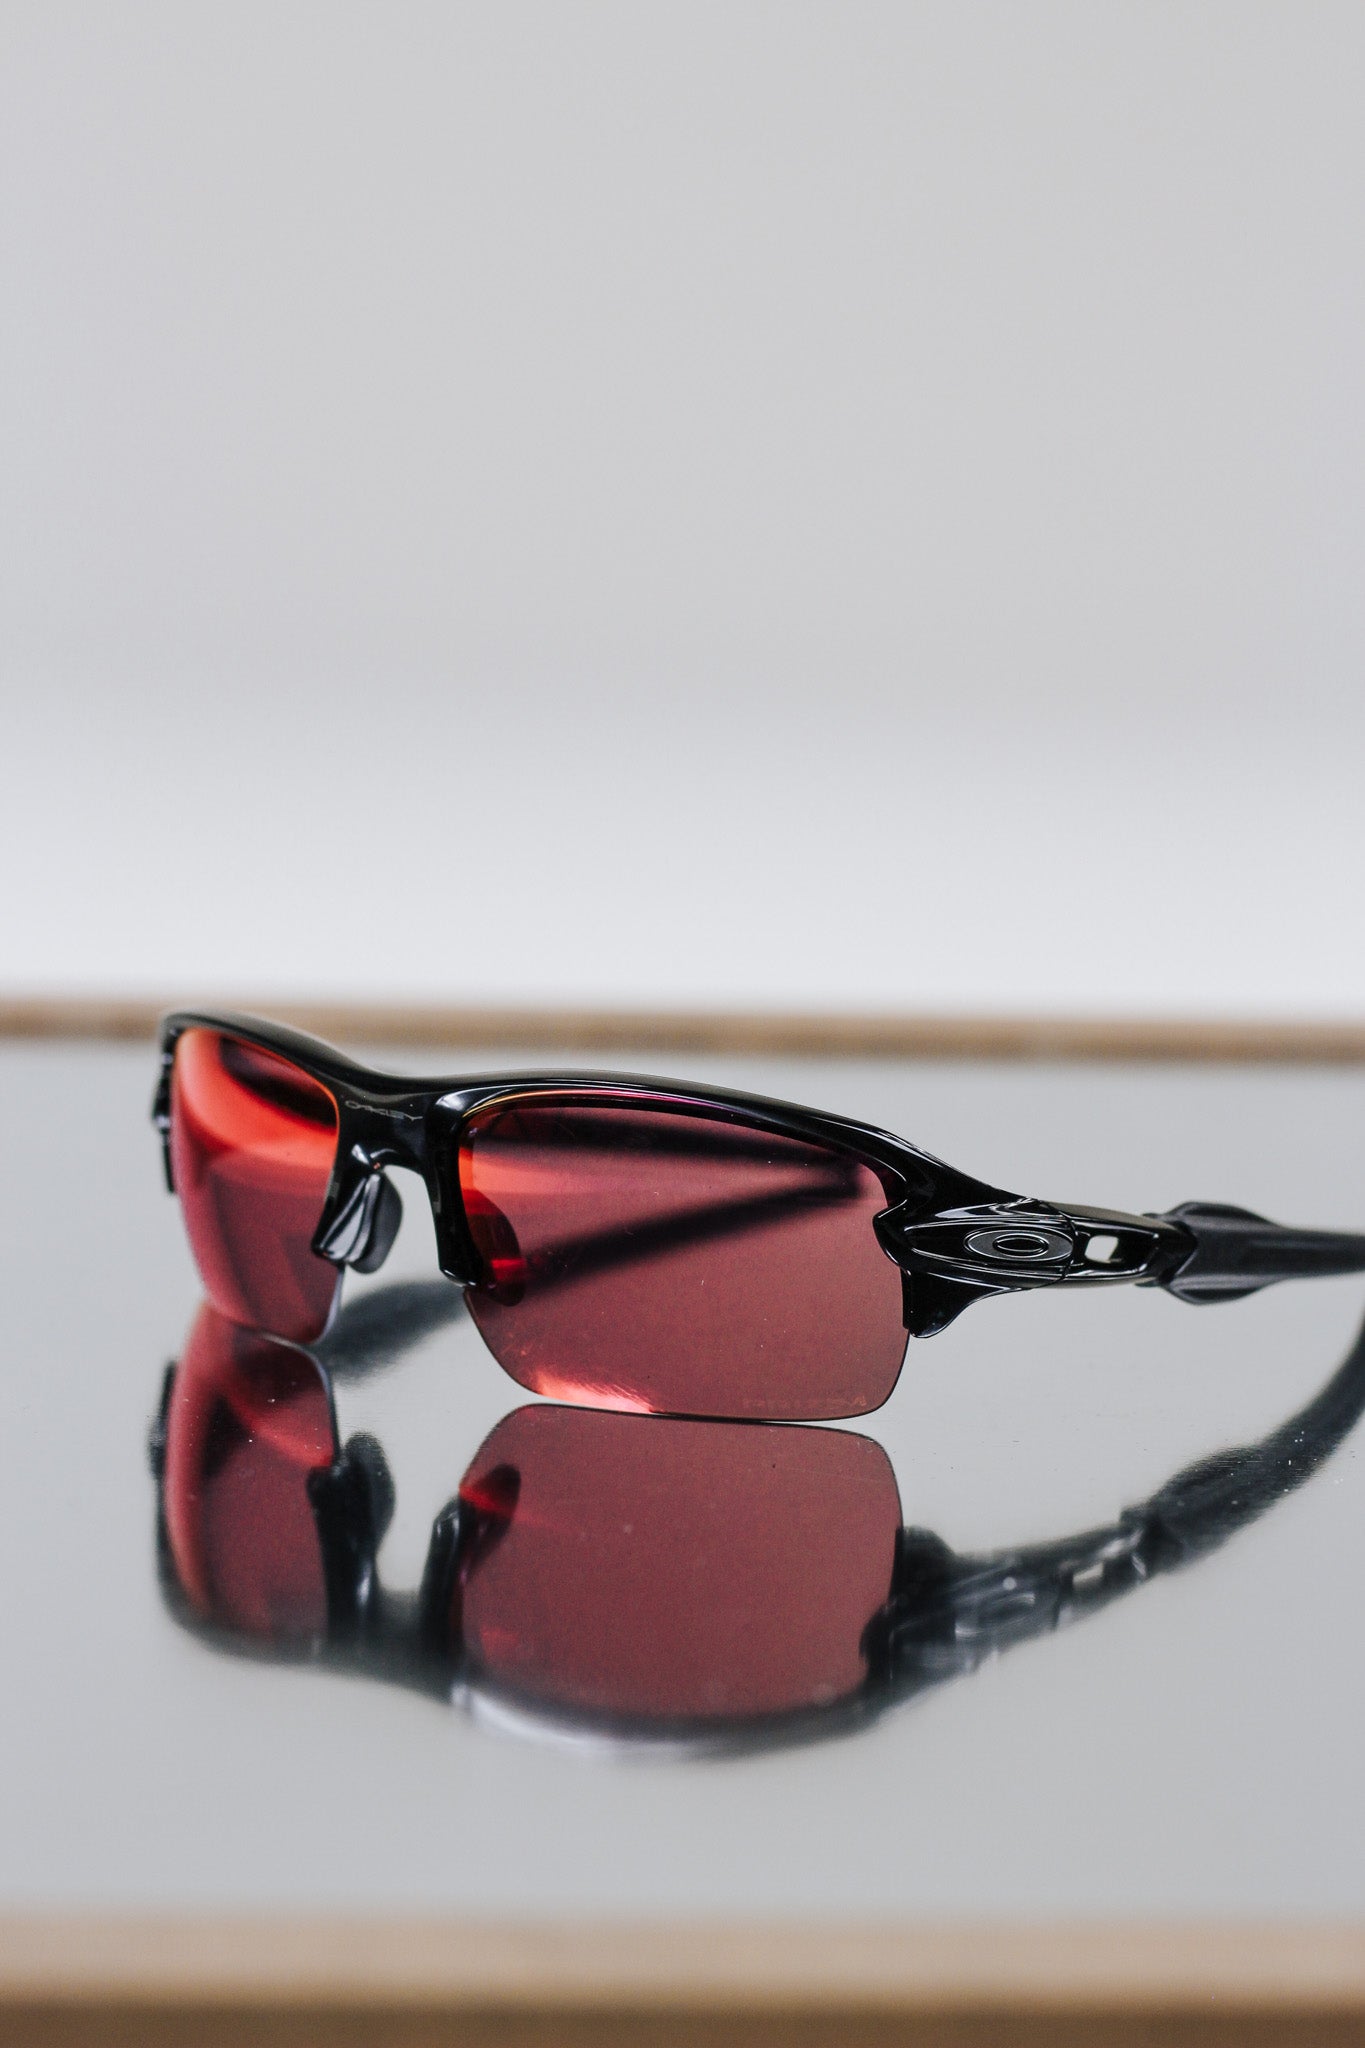 Flak® XS (Youth Fit) Sunglasses Oakley